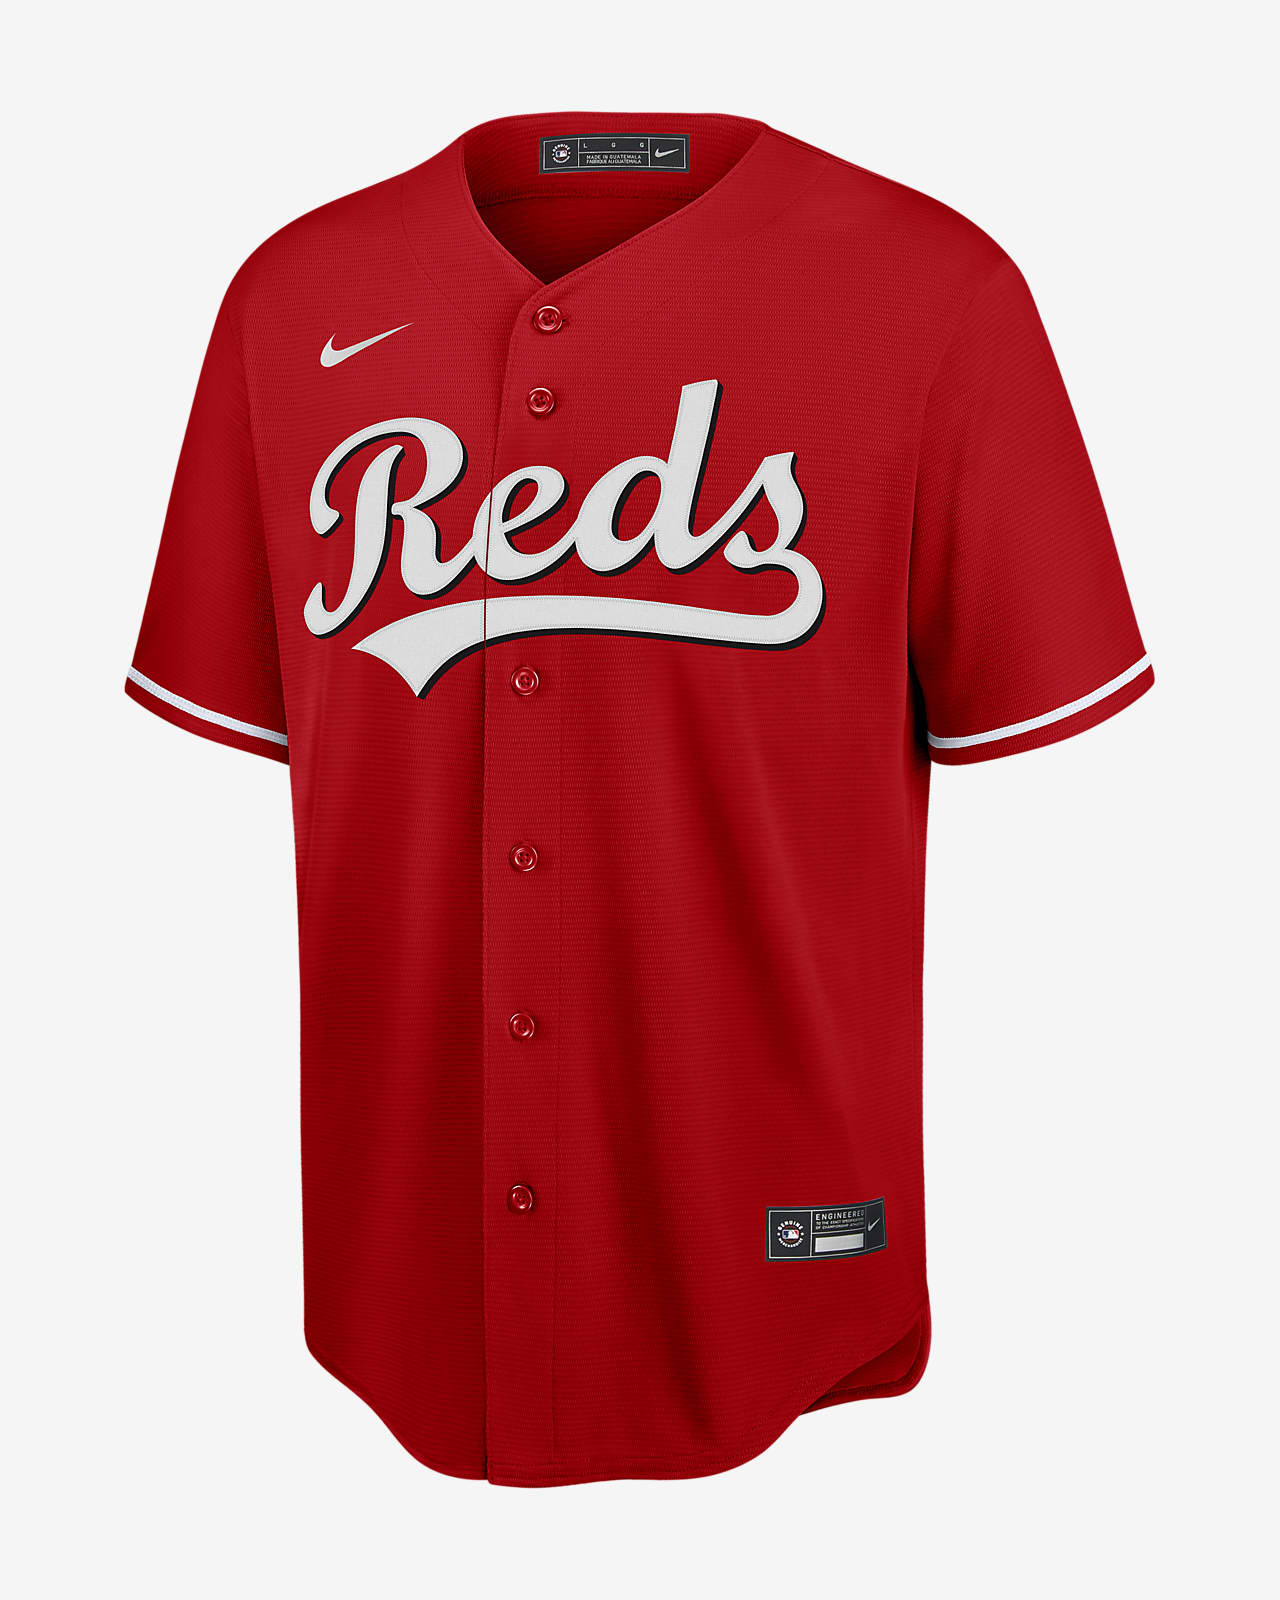 reds baseball shirts